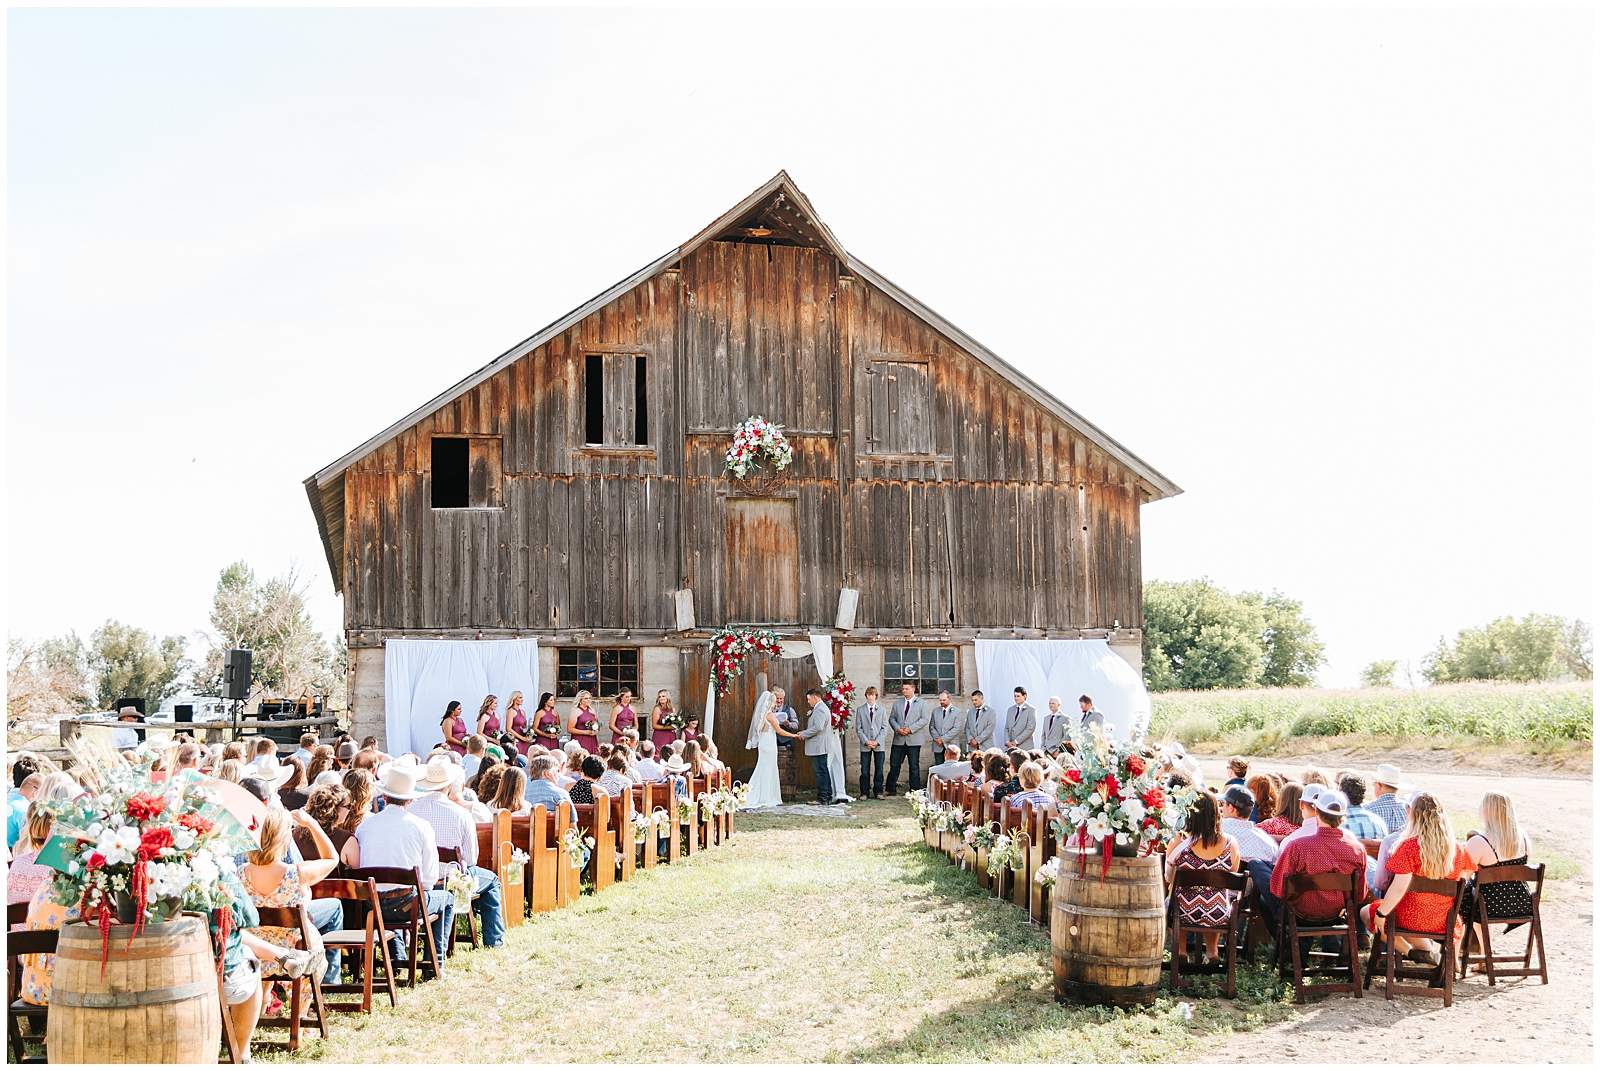 Rustic Barn as Ceremony Backdrop at Private Idaho Ranch Wedding